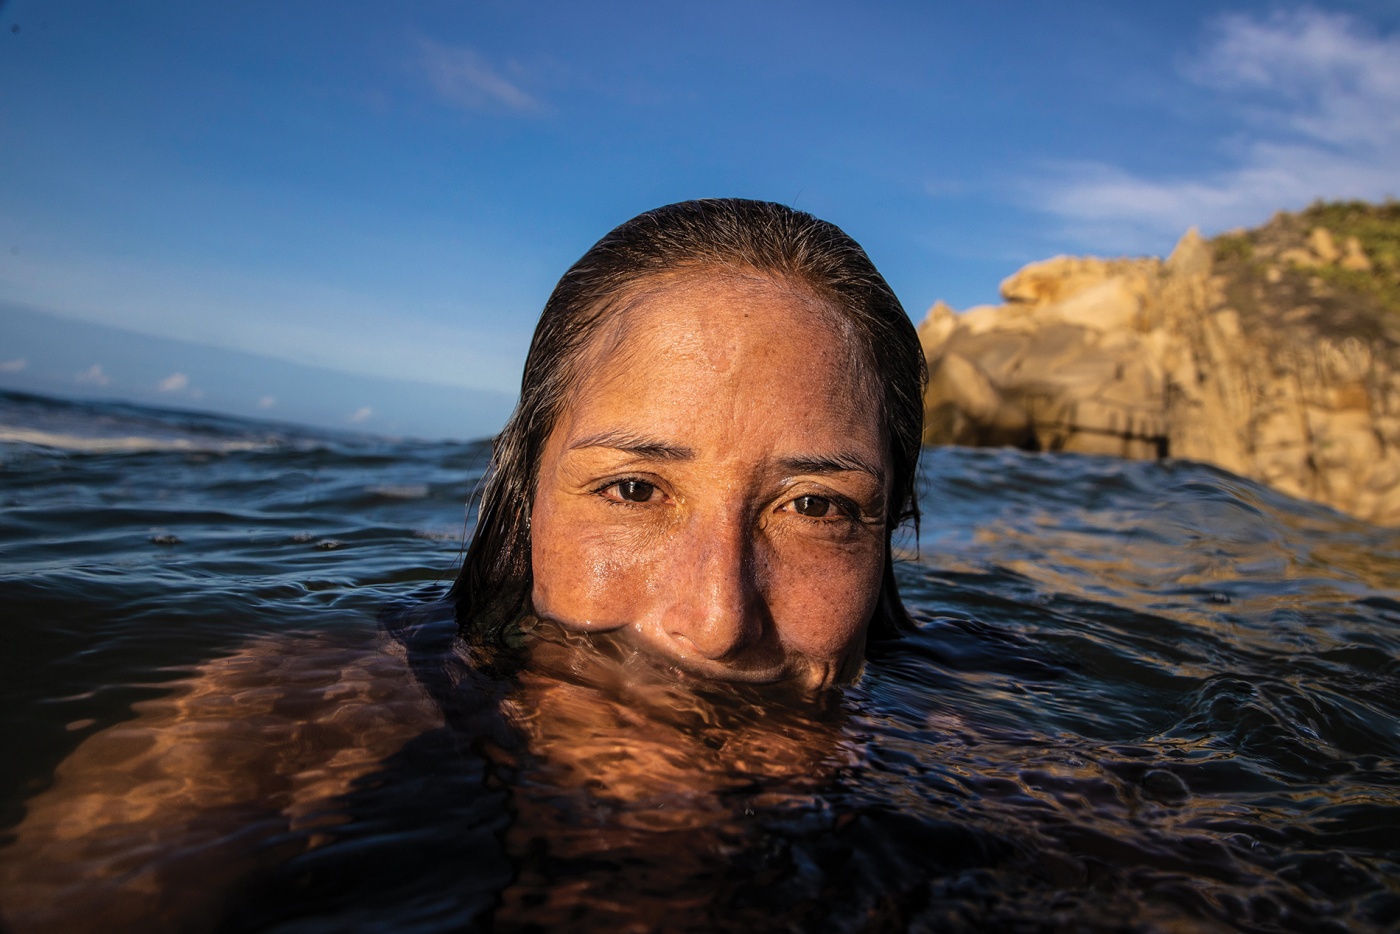 Sachi Cunningham selfie in the water